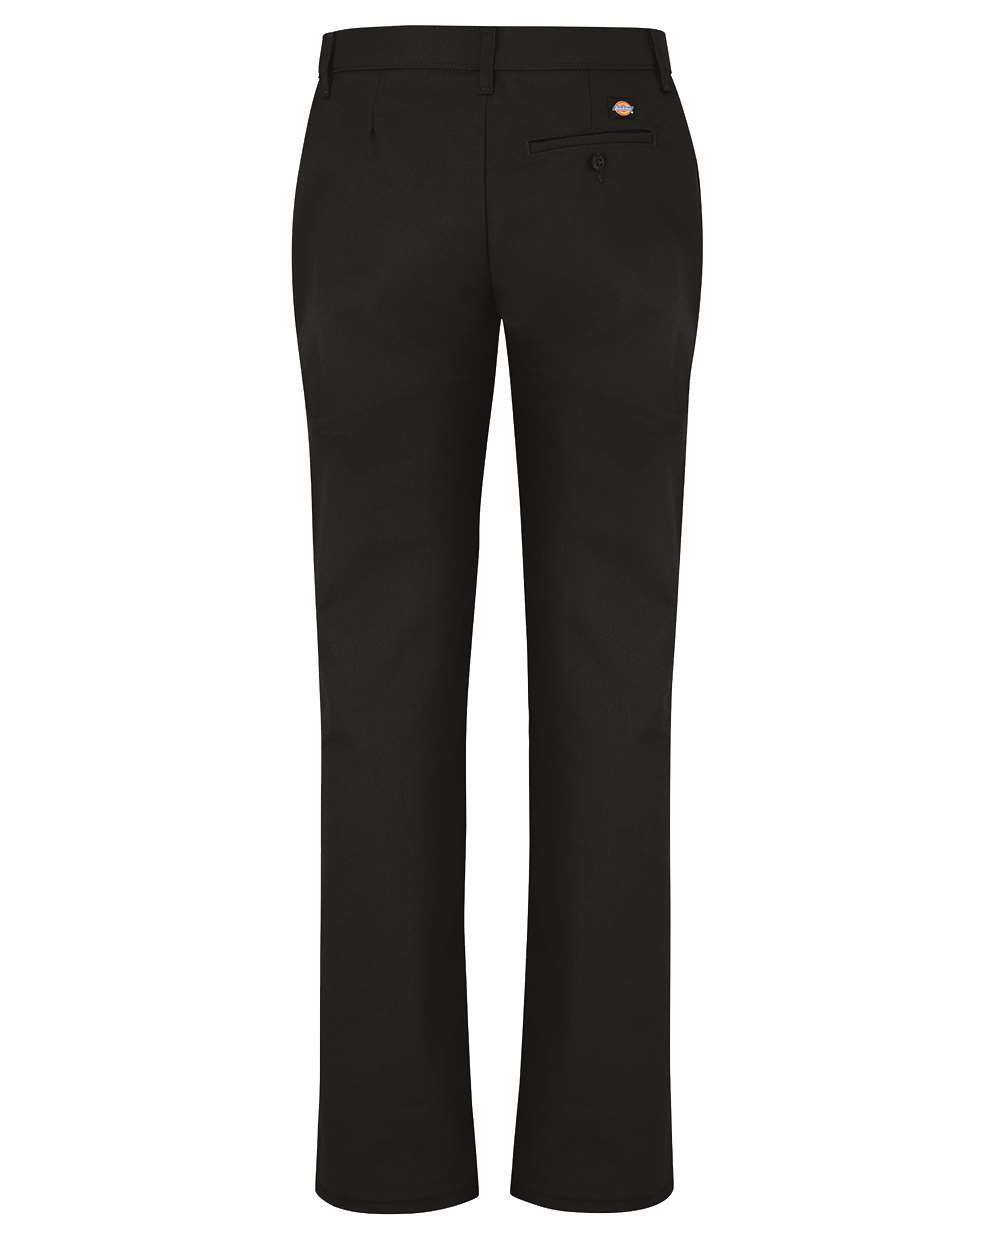 Dickies FP92 - Pantalones industriales de frente plano para mujer